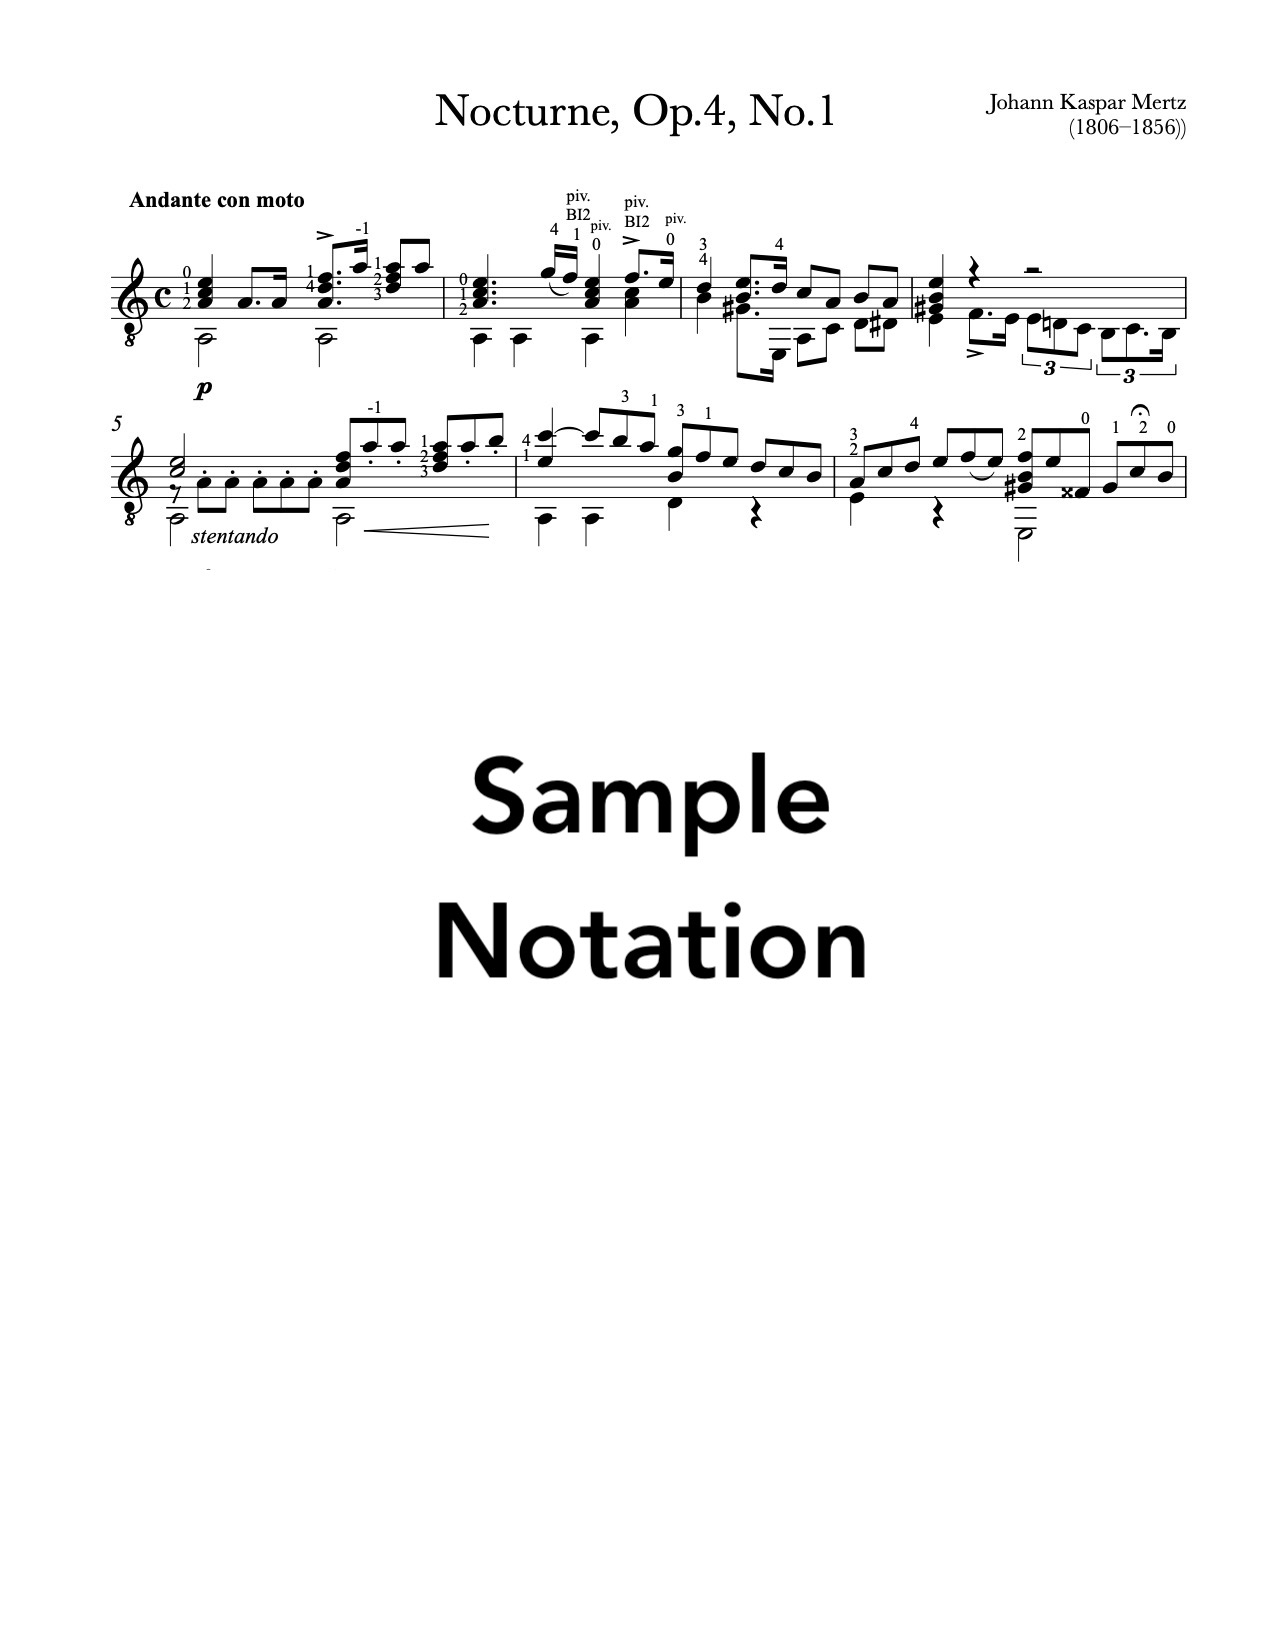 Nocturne No.1, Op.4  by Mertz (Notation Sample)